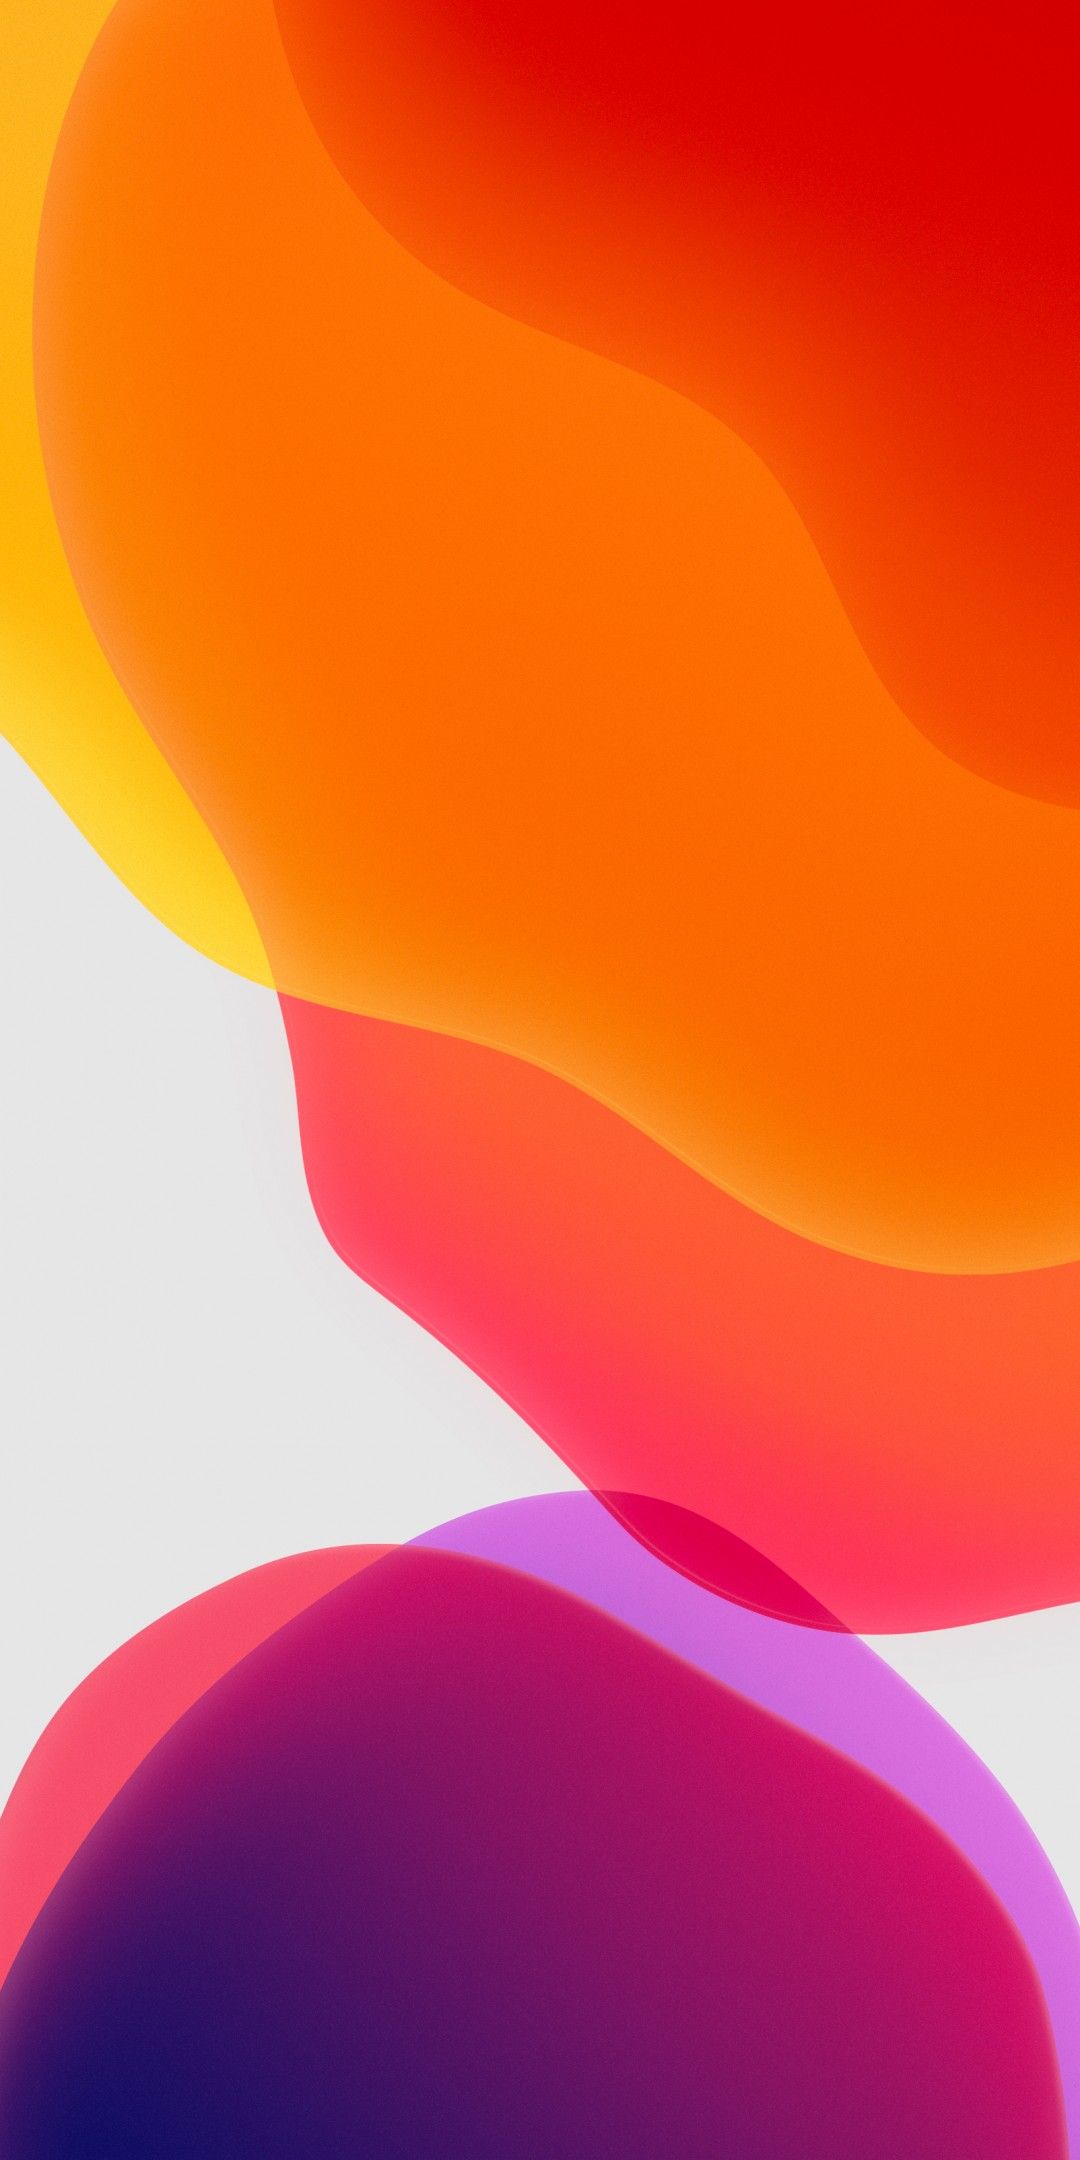 iPadOS Wallpaper 4K, Stock, Orange, Abstract